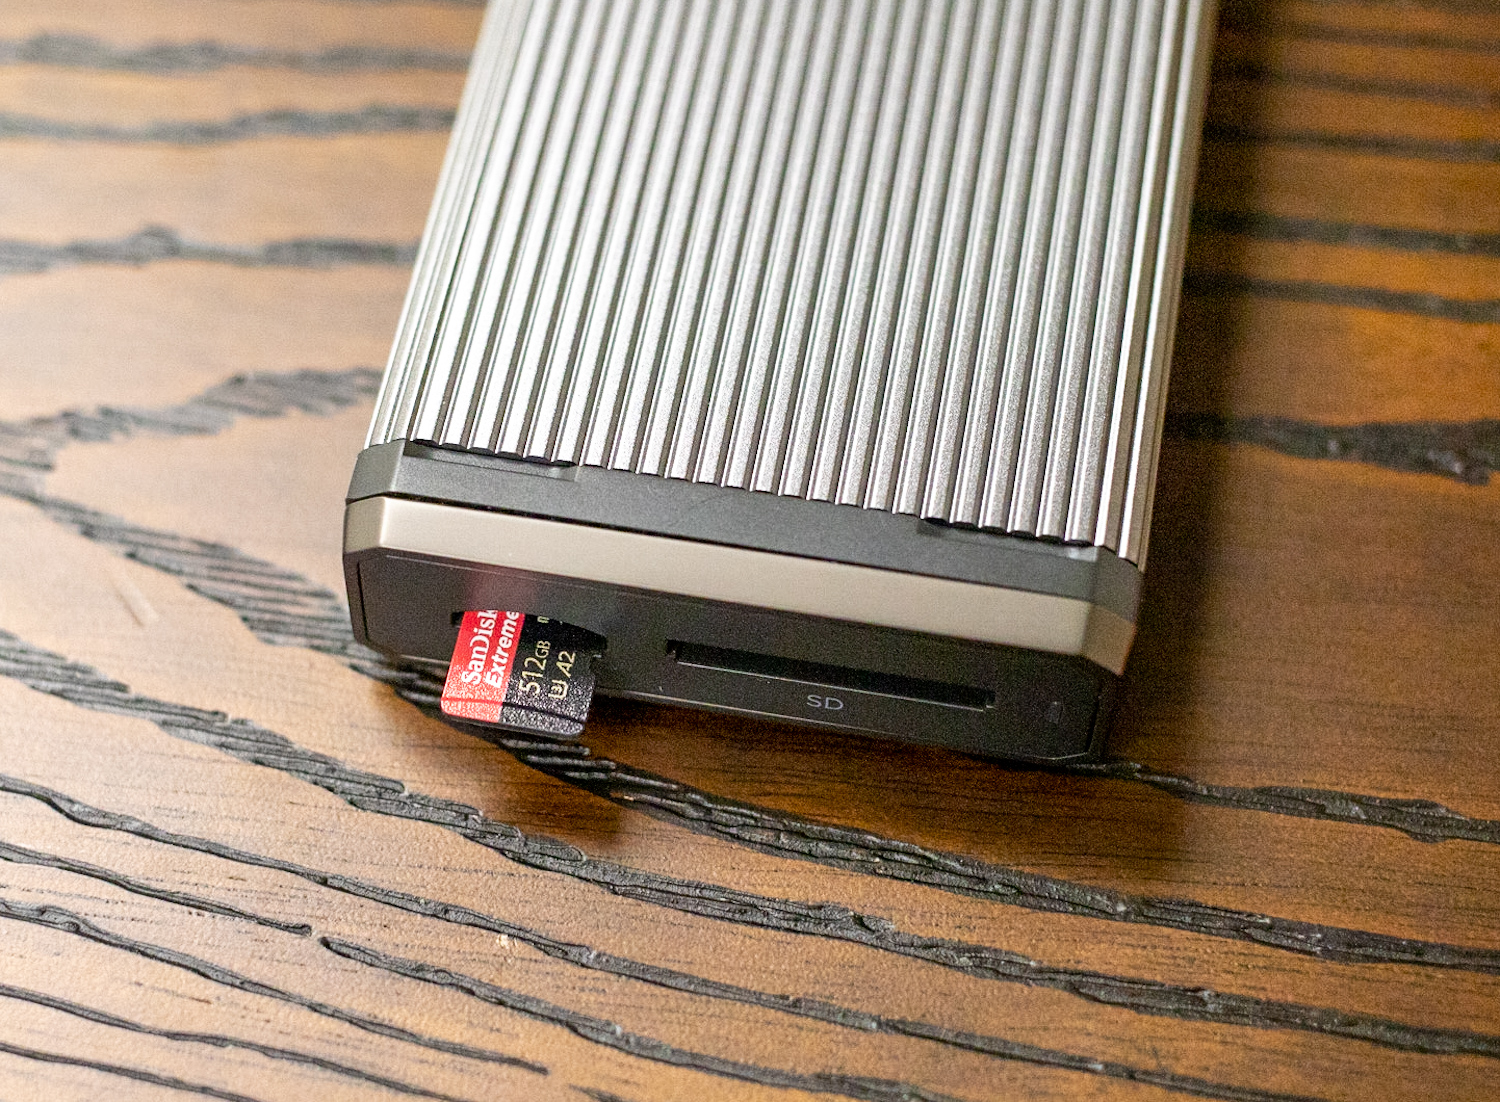 Memoria Micro SD SanDisk Extreme PRO 64GB